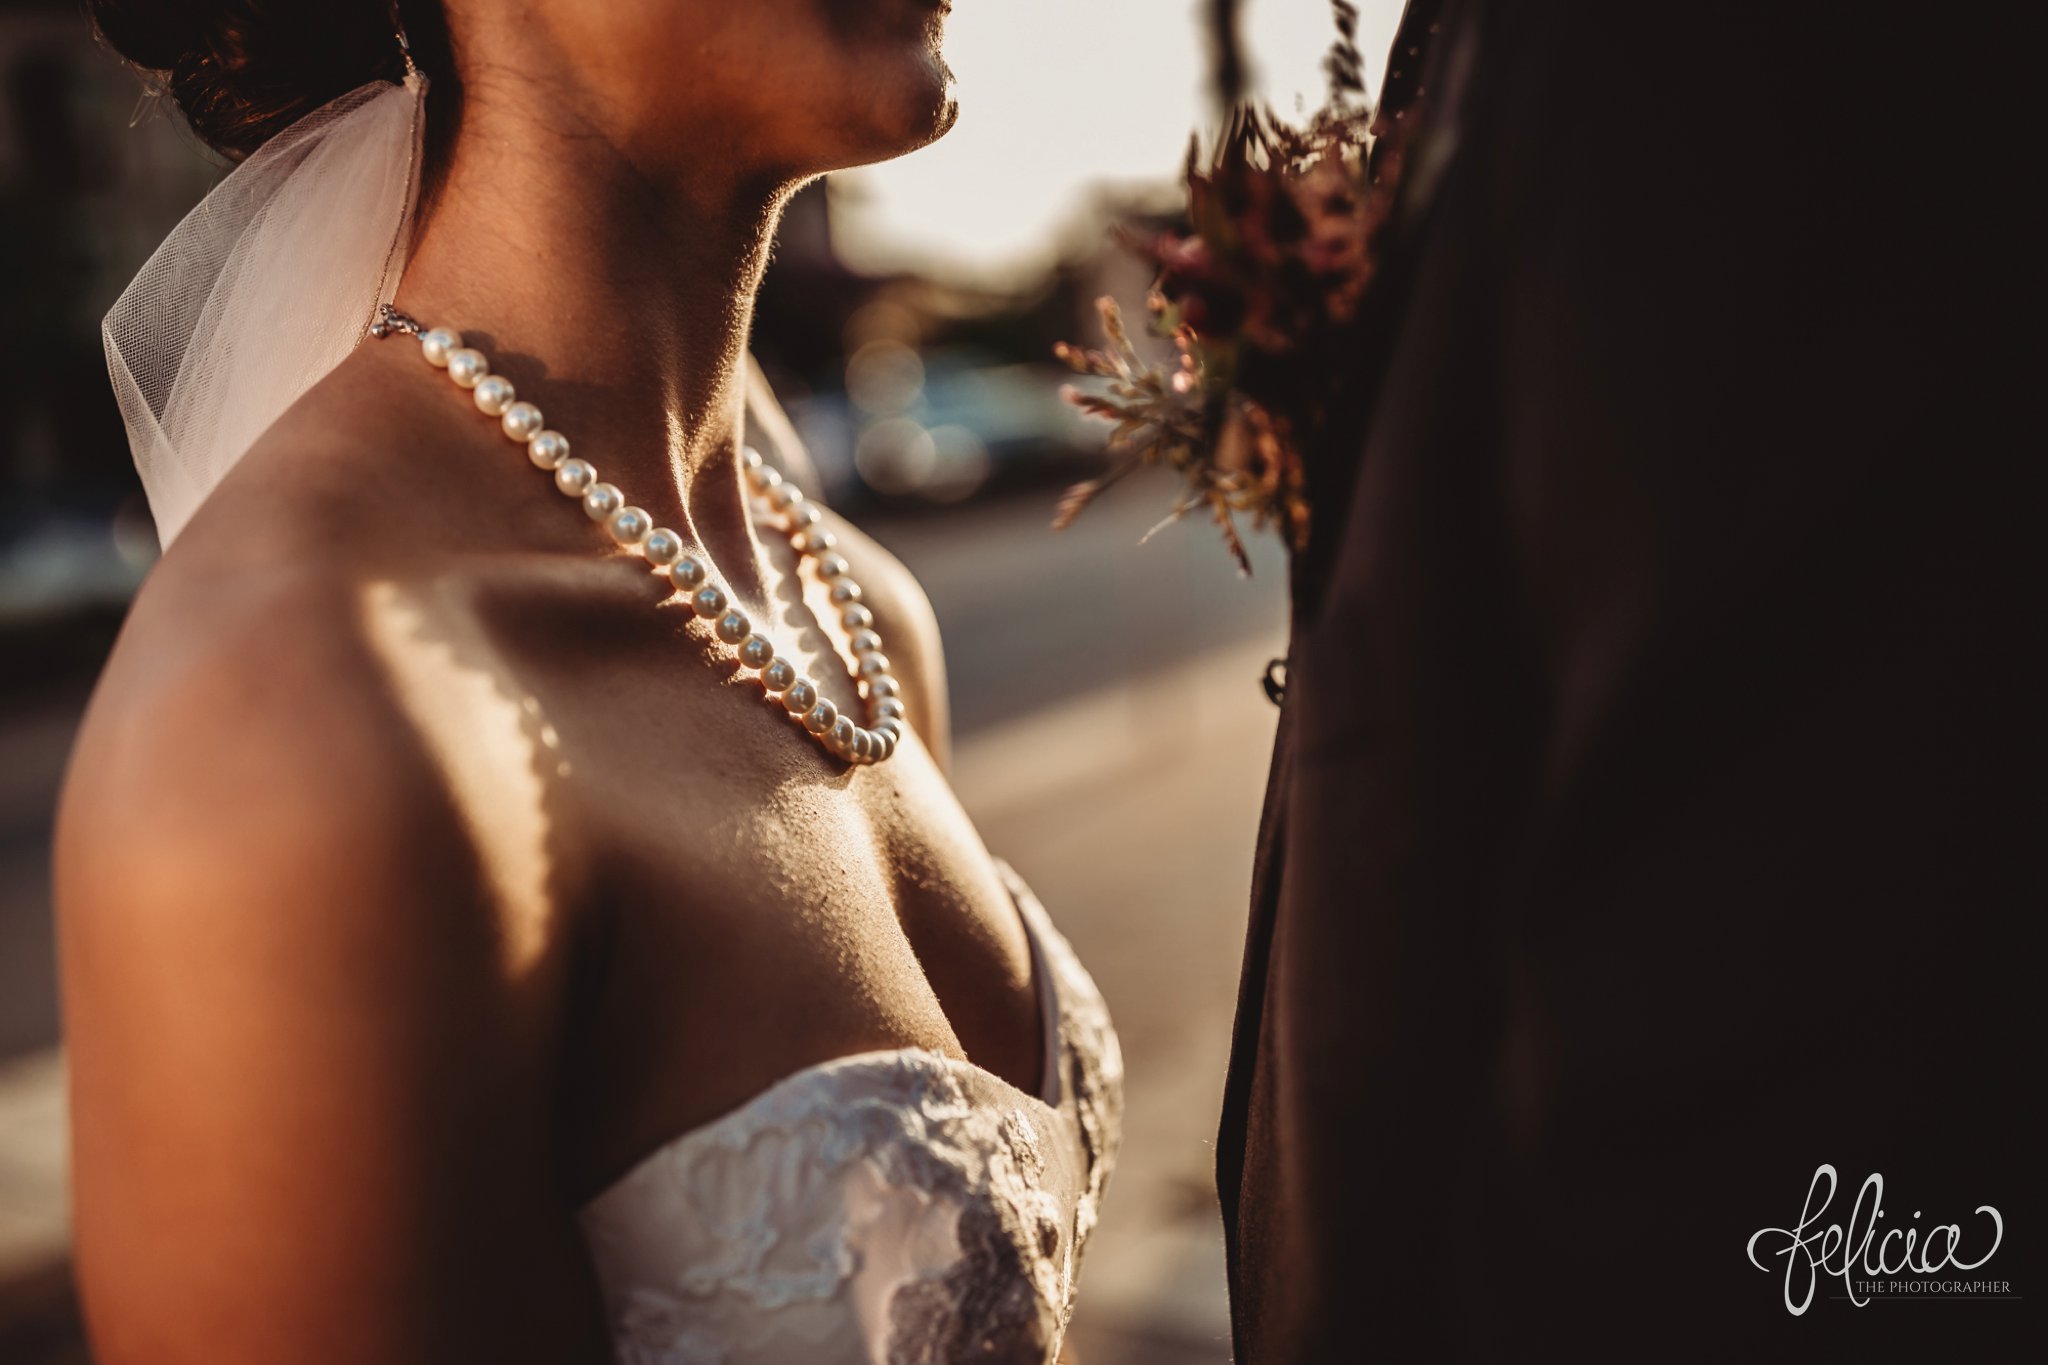 images by feliciathephotographer.com | wedding photographer | kansas city | details | golden hour | sunset | pearls | strapless dress | rustic boutonniere | natural lighting | dramatic | 